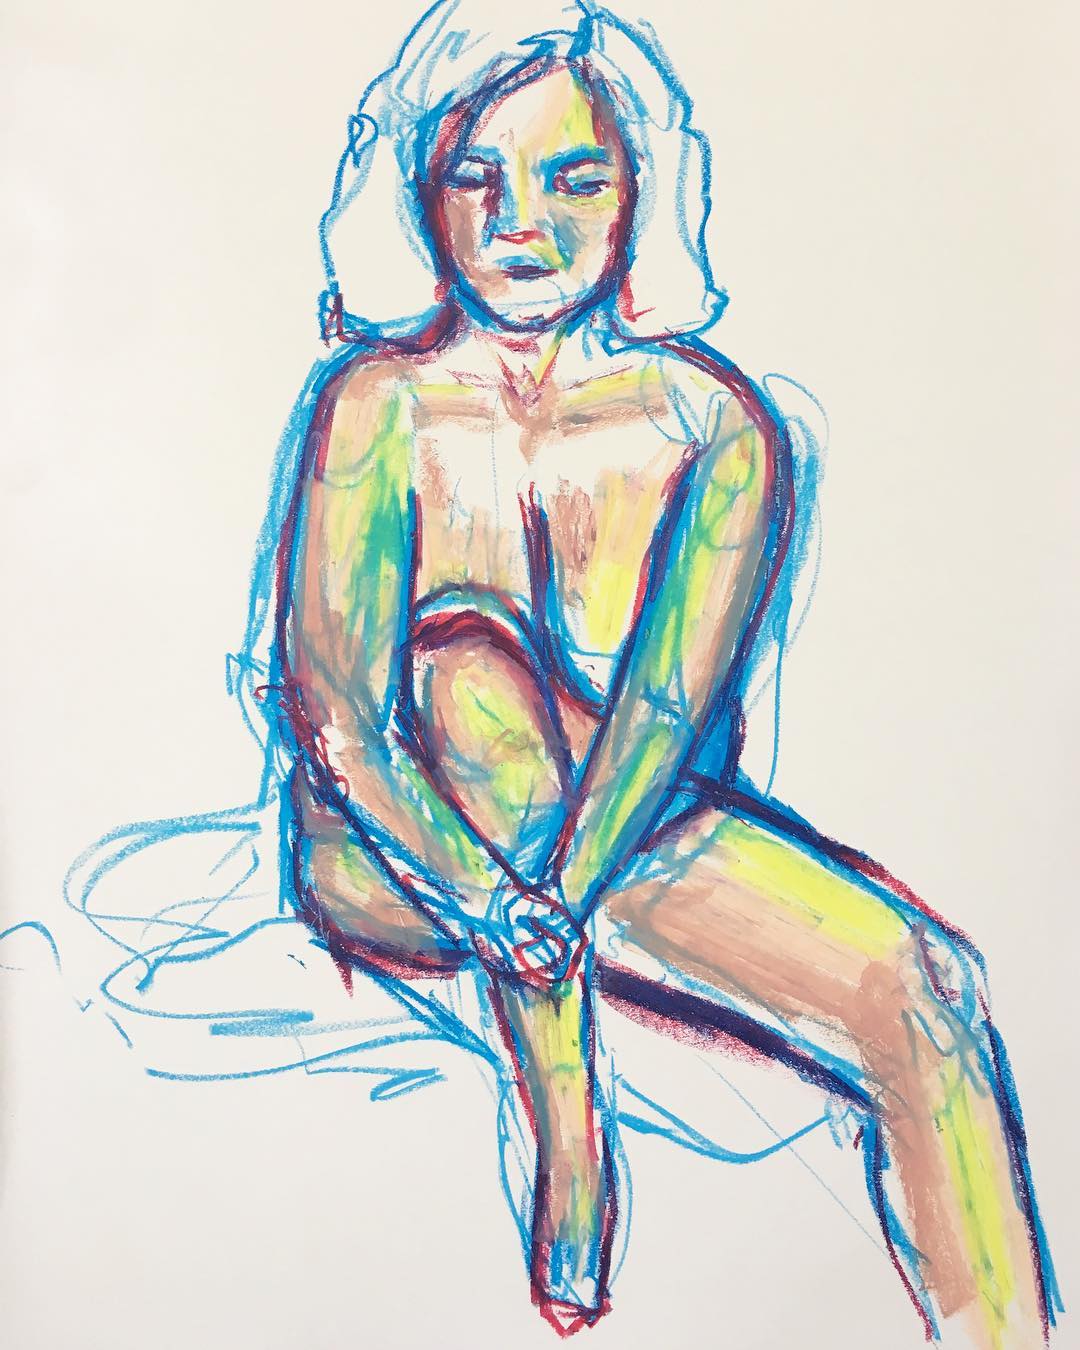  Oil pastel on paper, 18x24” (2017) 